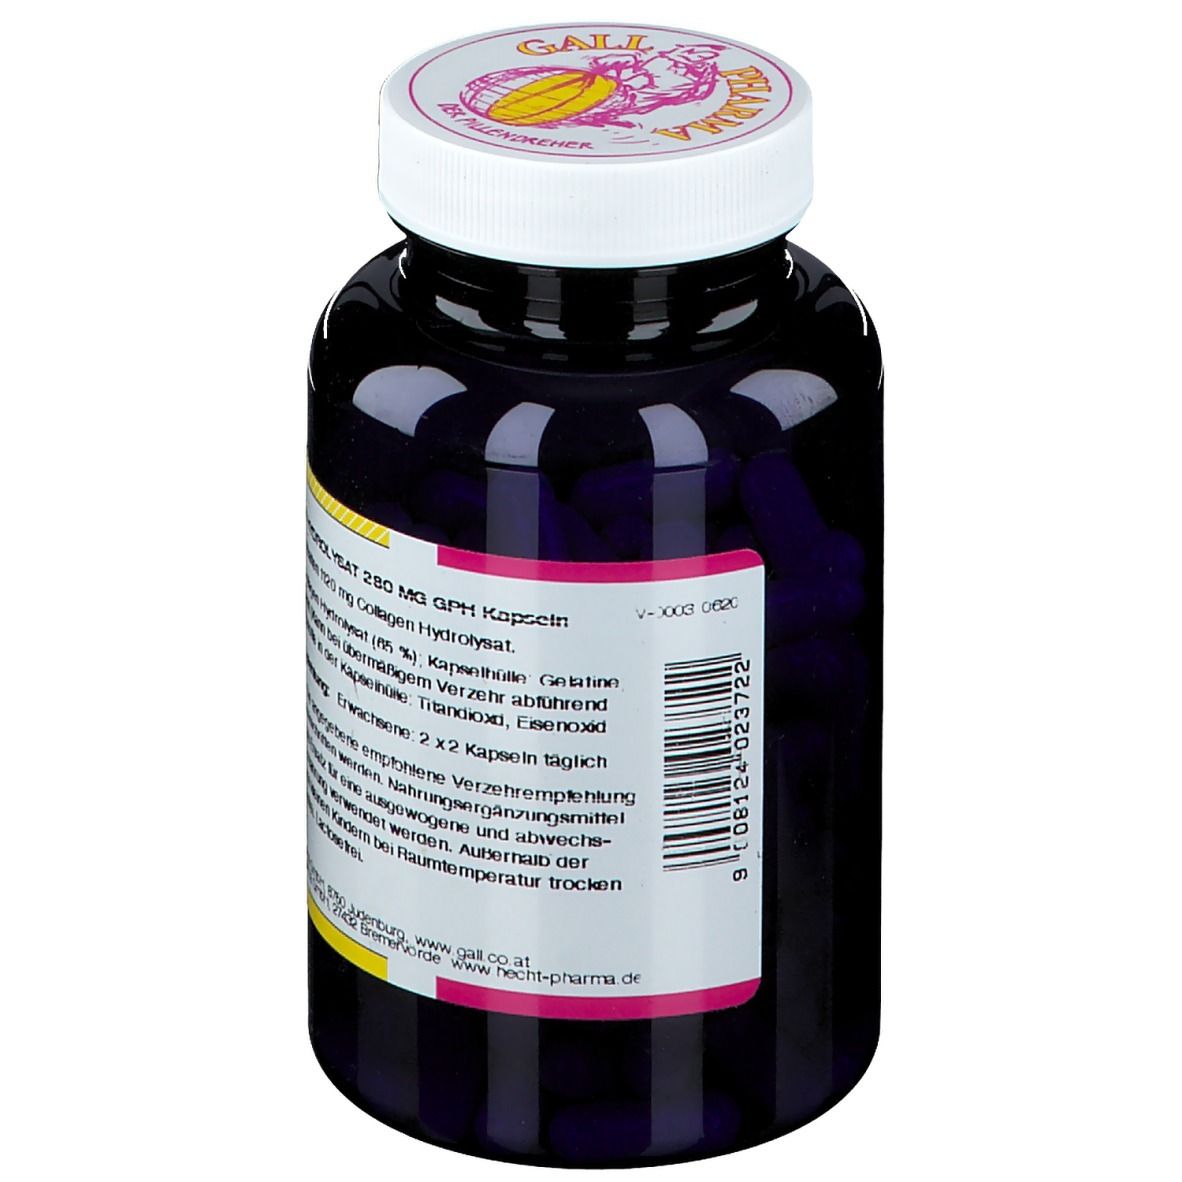 GALL PHARMA Collagen Hydrolysat 280 mg GPH Kapseln